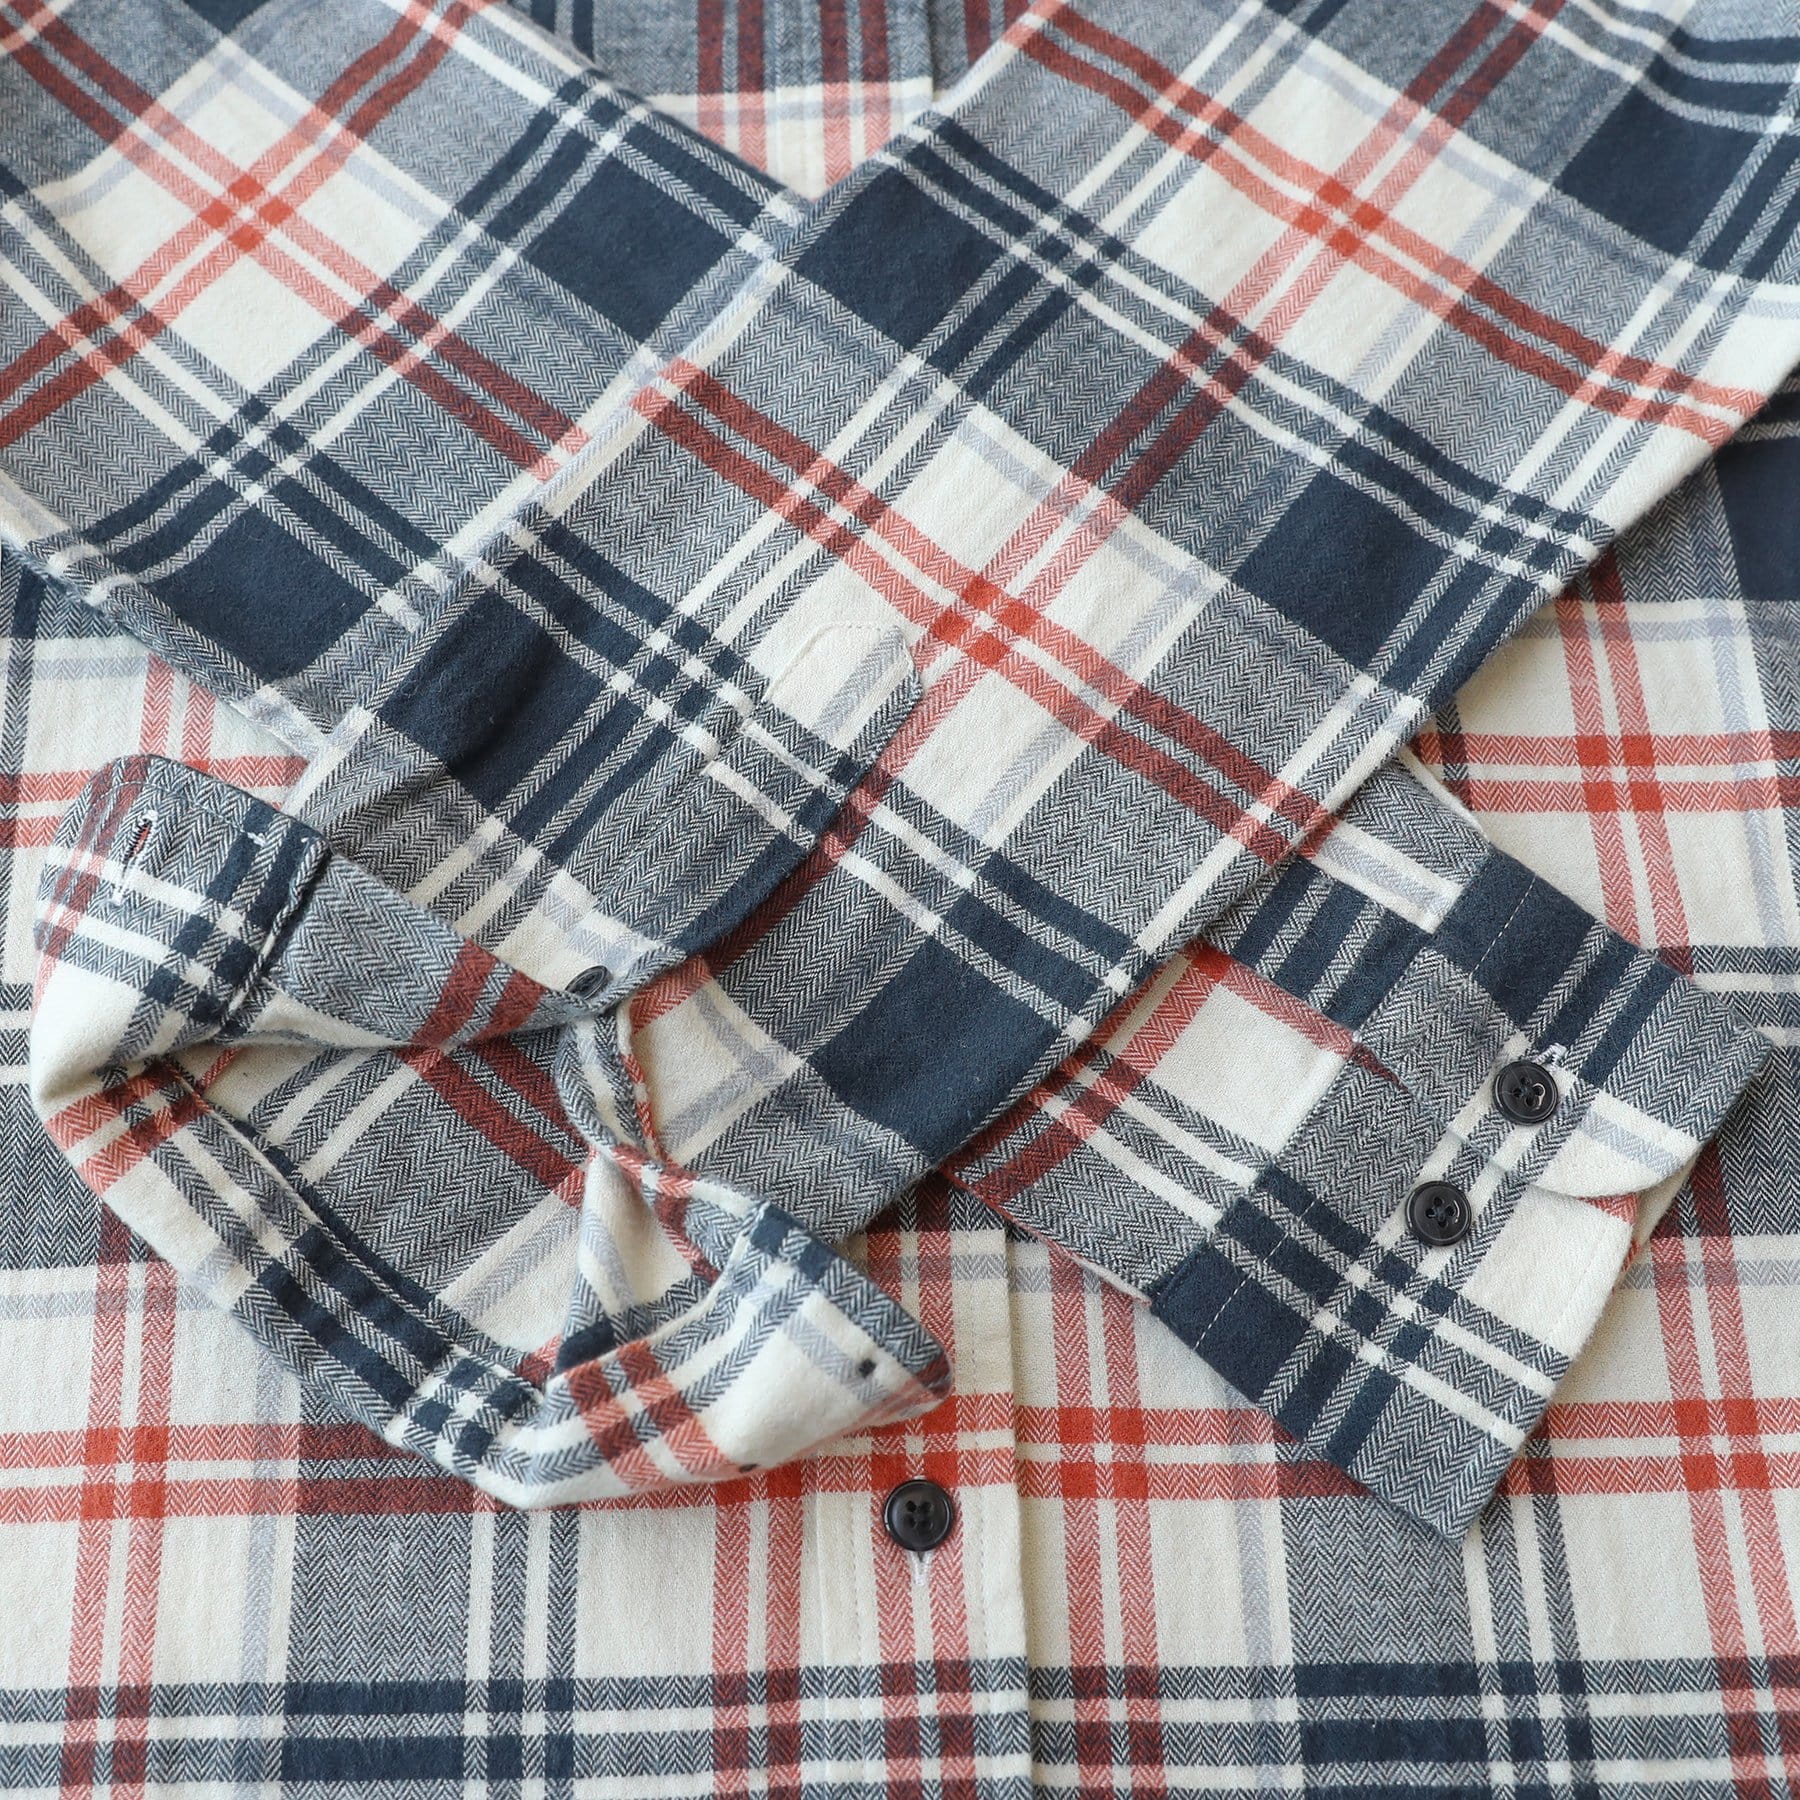 Men's Plaid Flannel Long Sleeve Shirts #0358